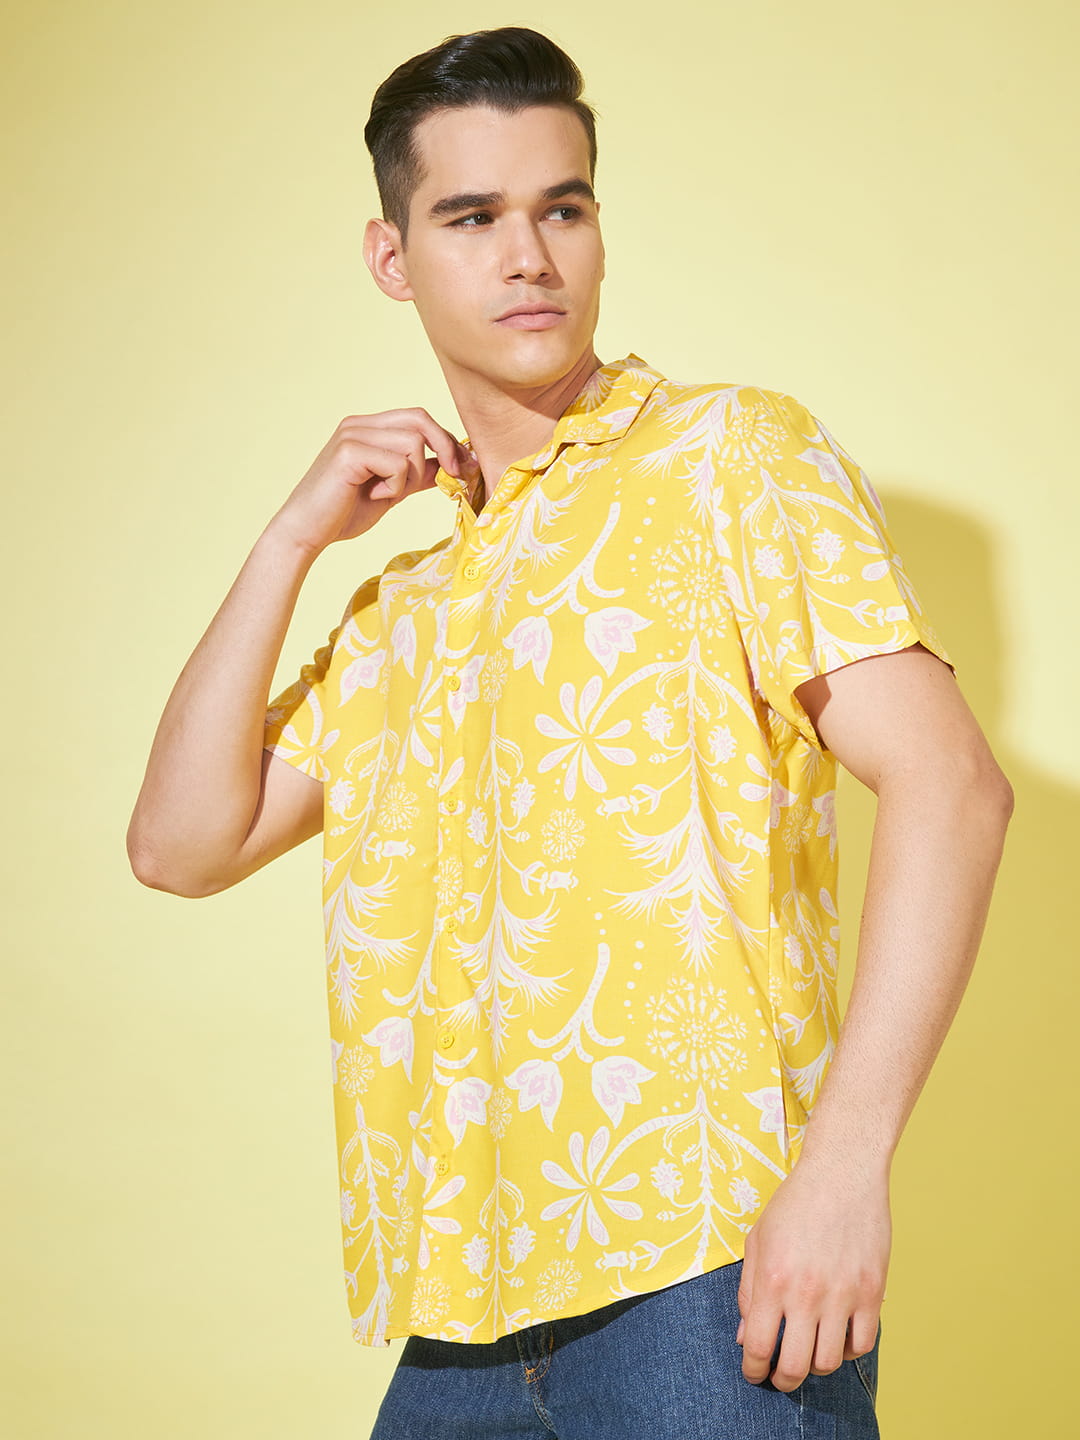 Sunlit Whispers: Lightweight Yellow Printed Shirt